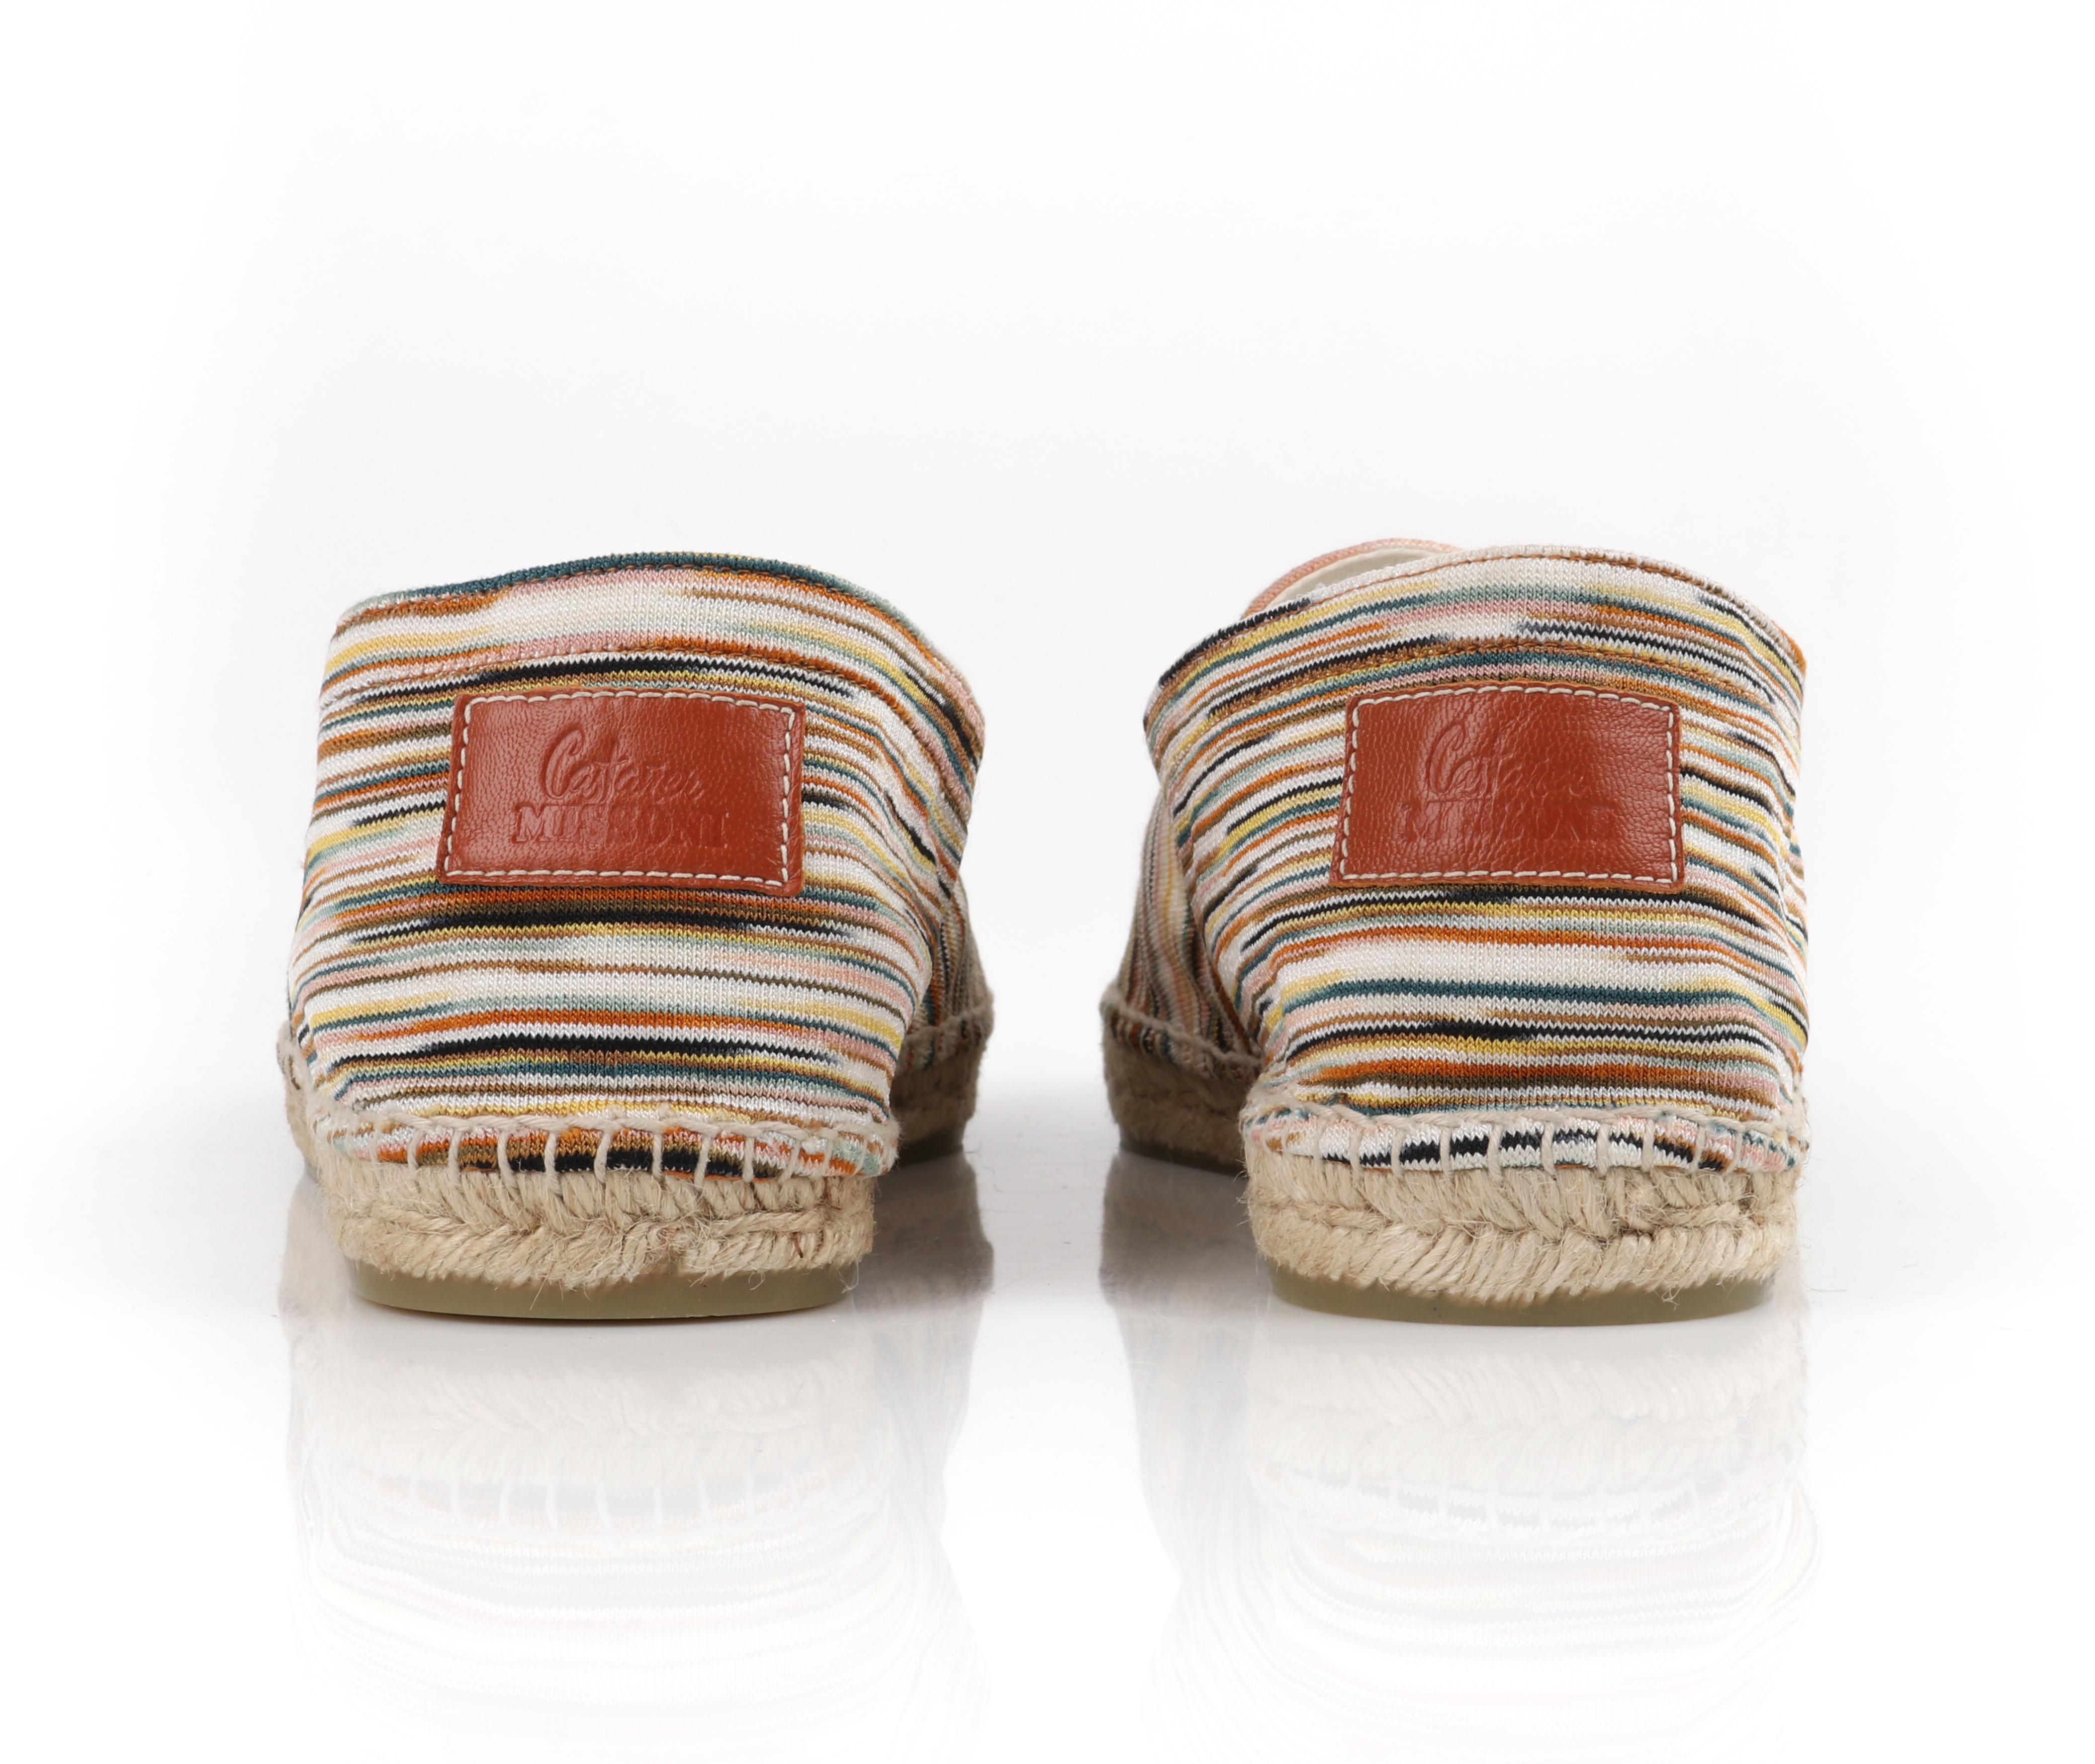 MISSONI Castañer S/S 2019 Multicolor Stripe Jute Rope Kenda Espadrilles Shoes  3